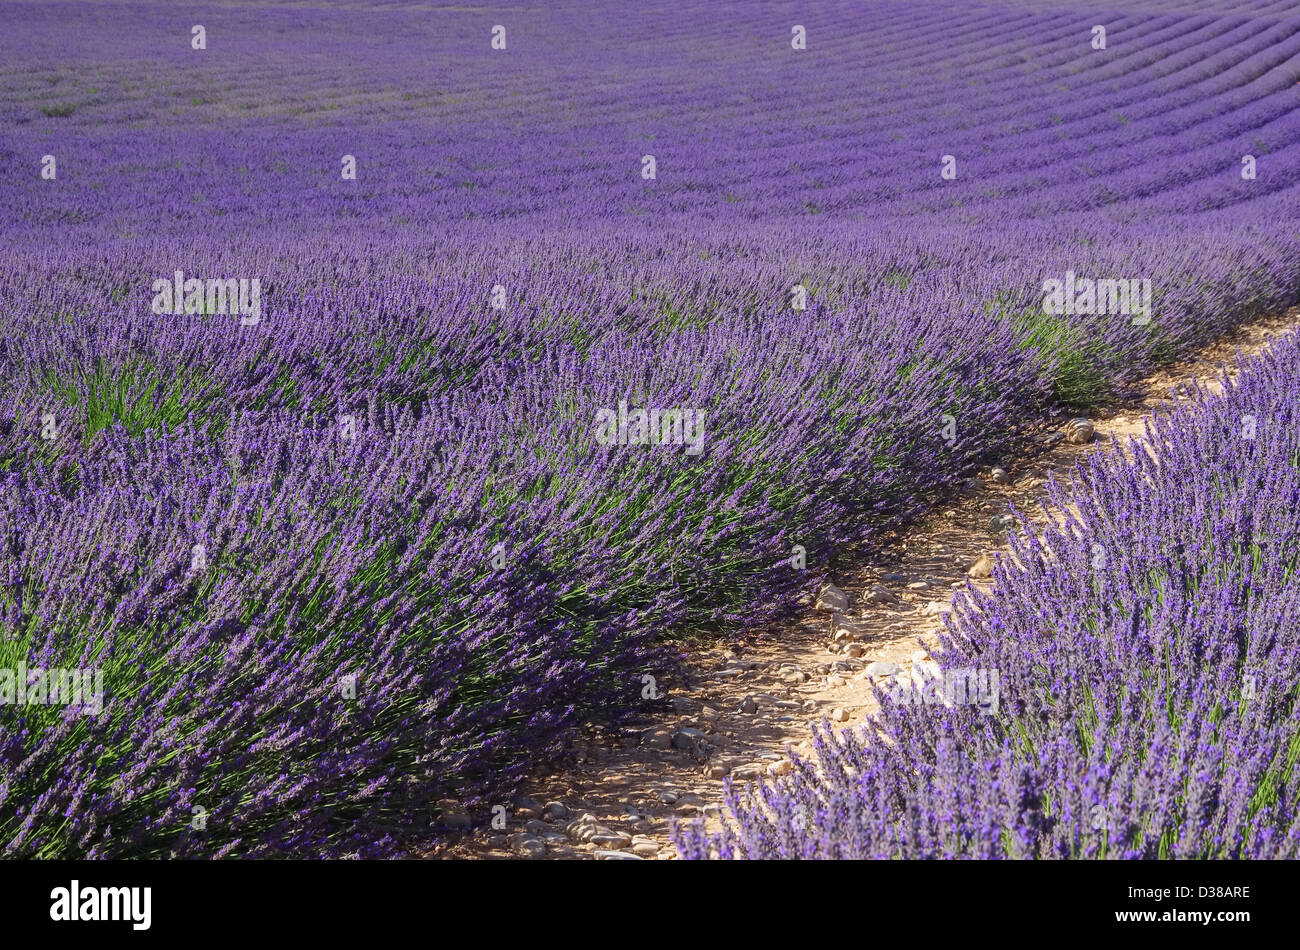 Lavendelfeld - lavender field 76 Stock Photo